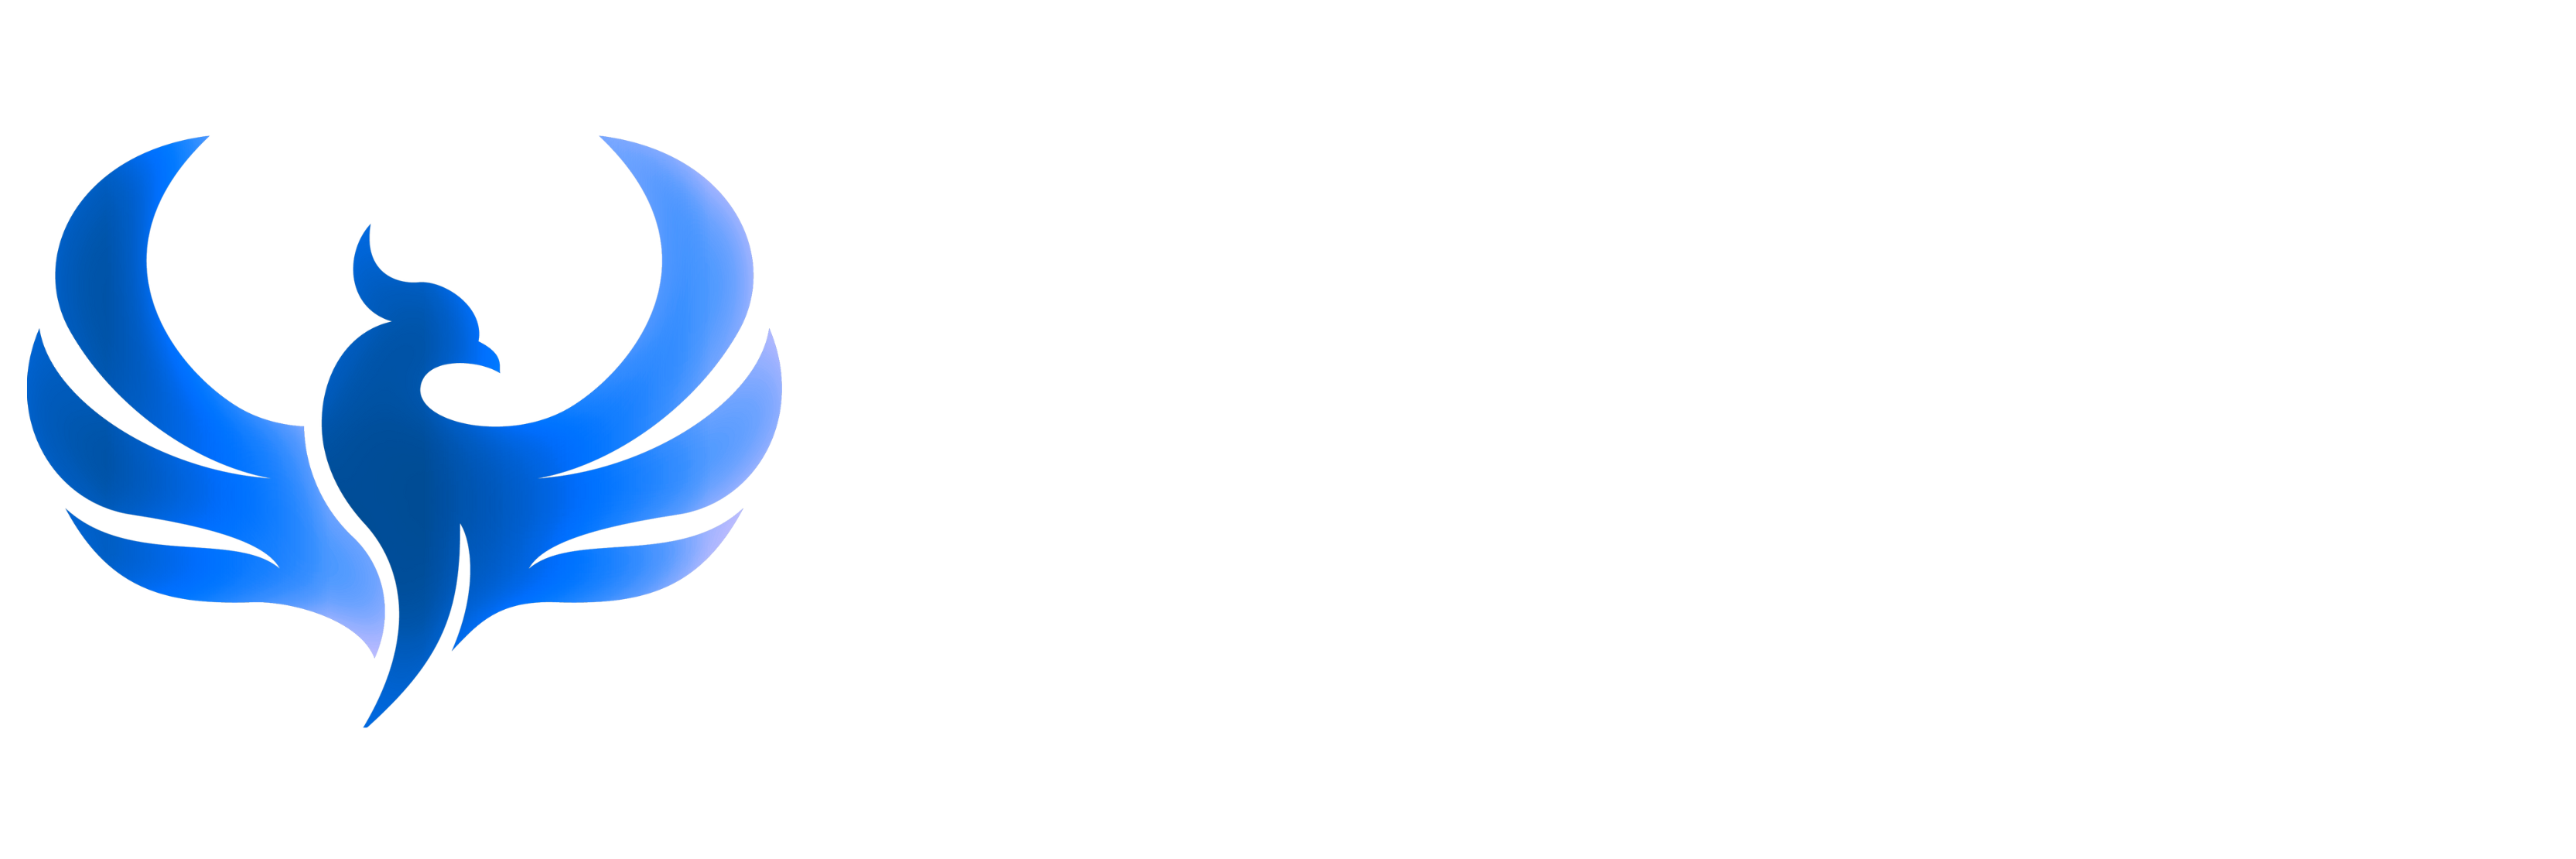 Jentech Logo